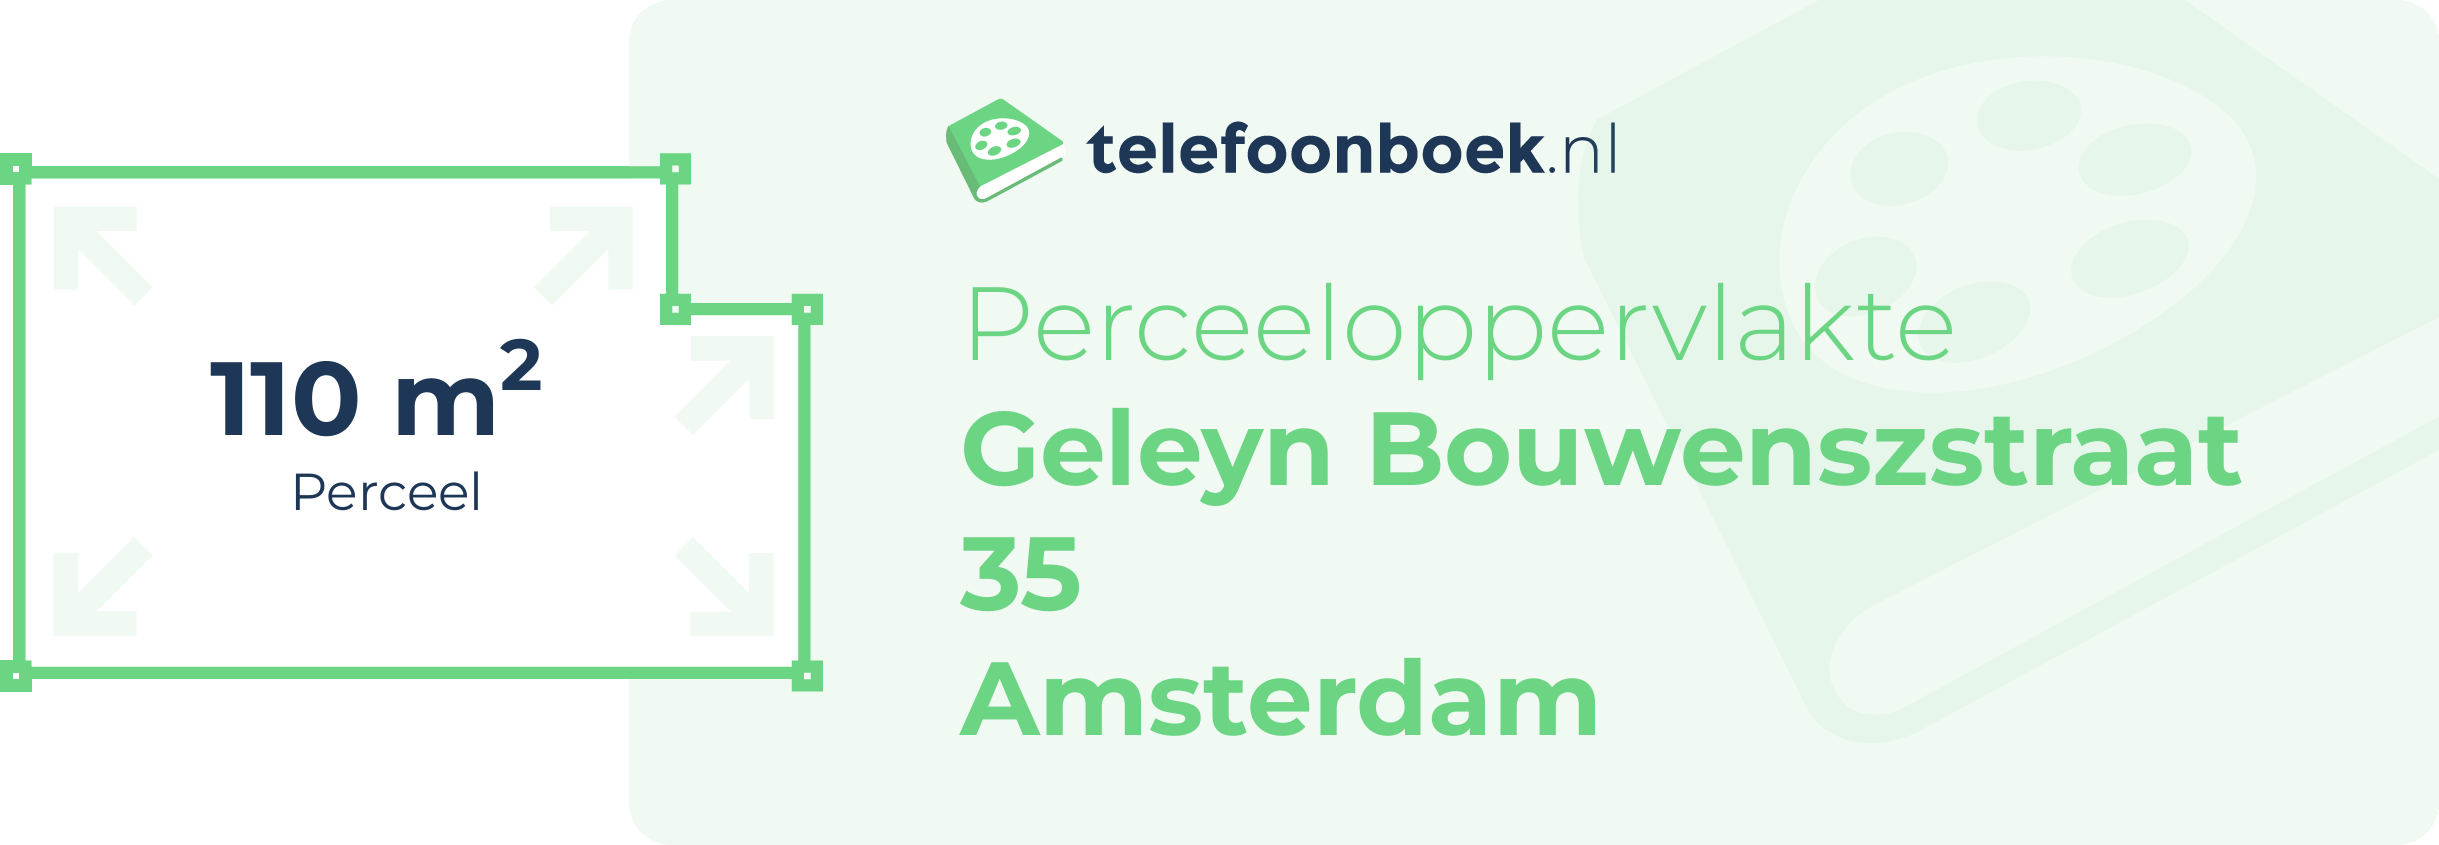 Perceeloppervlakte Geleyn Bouwenszstraat 35 Amsterdam